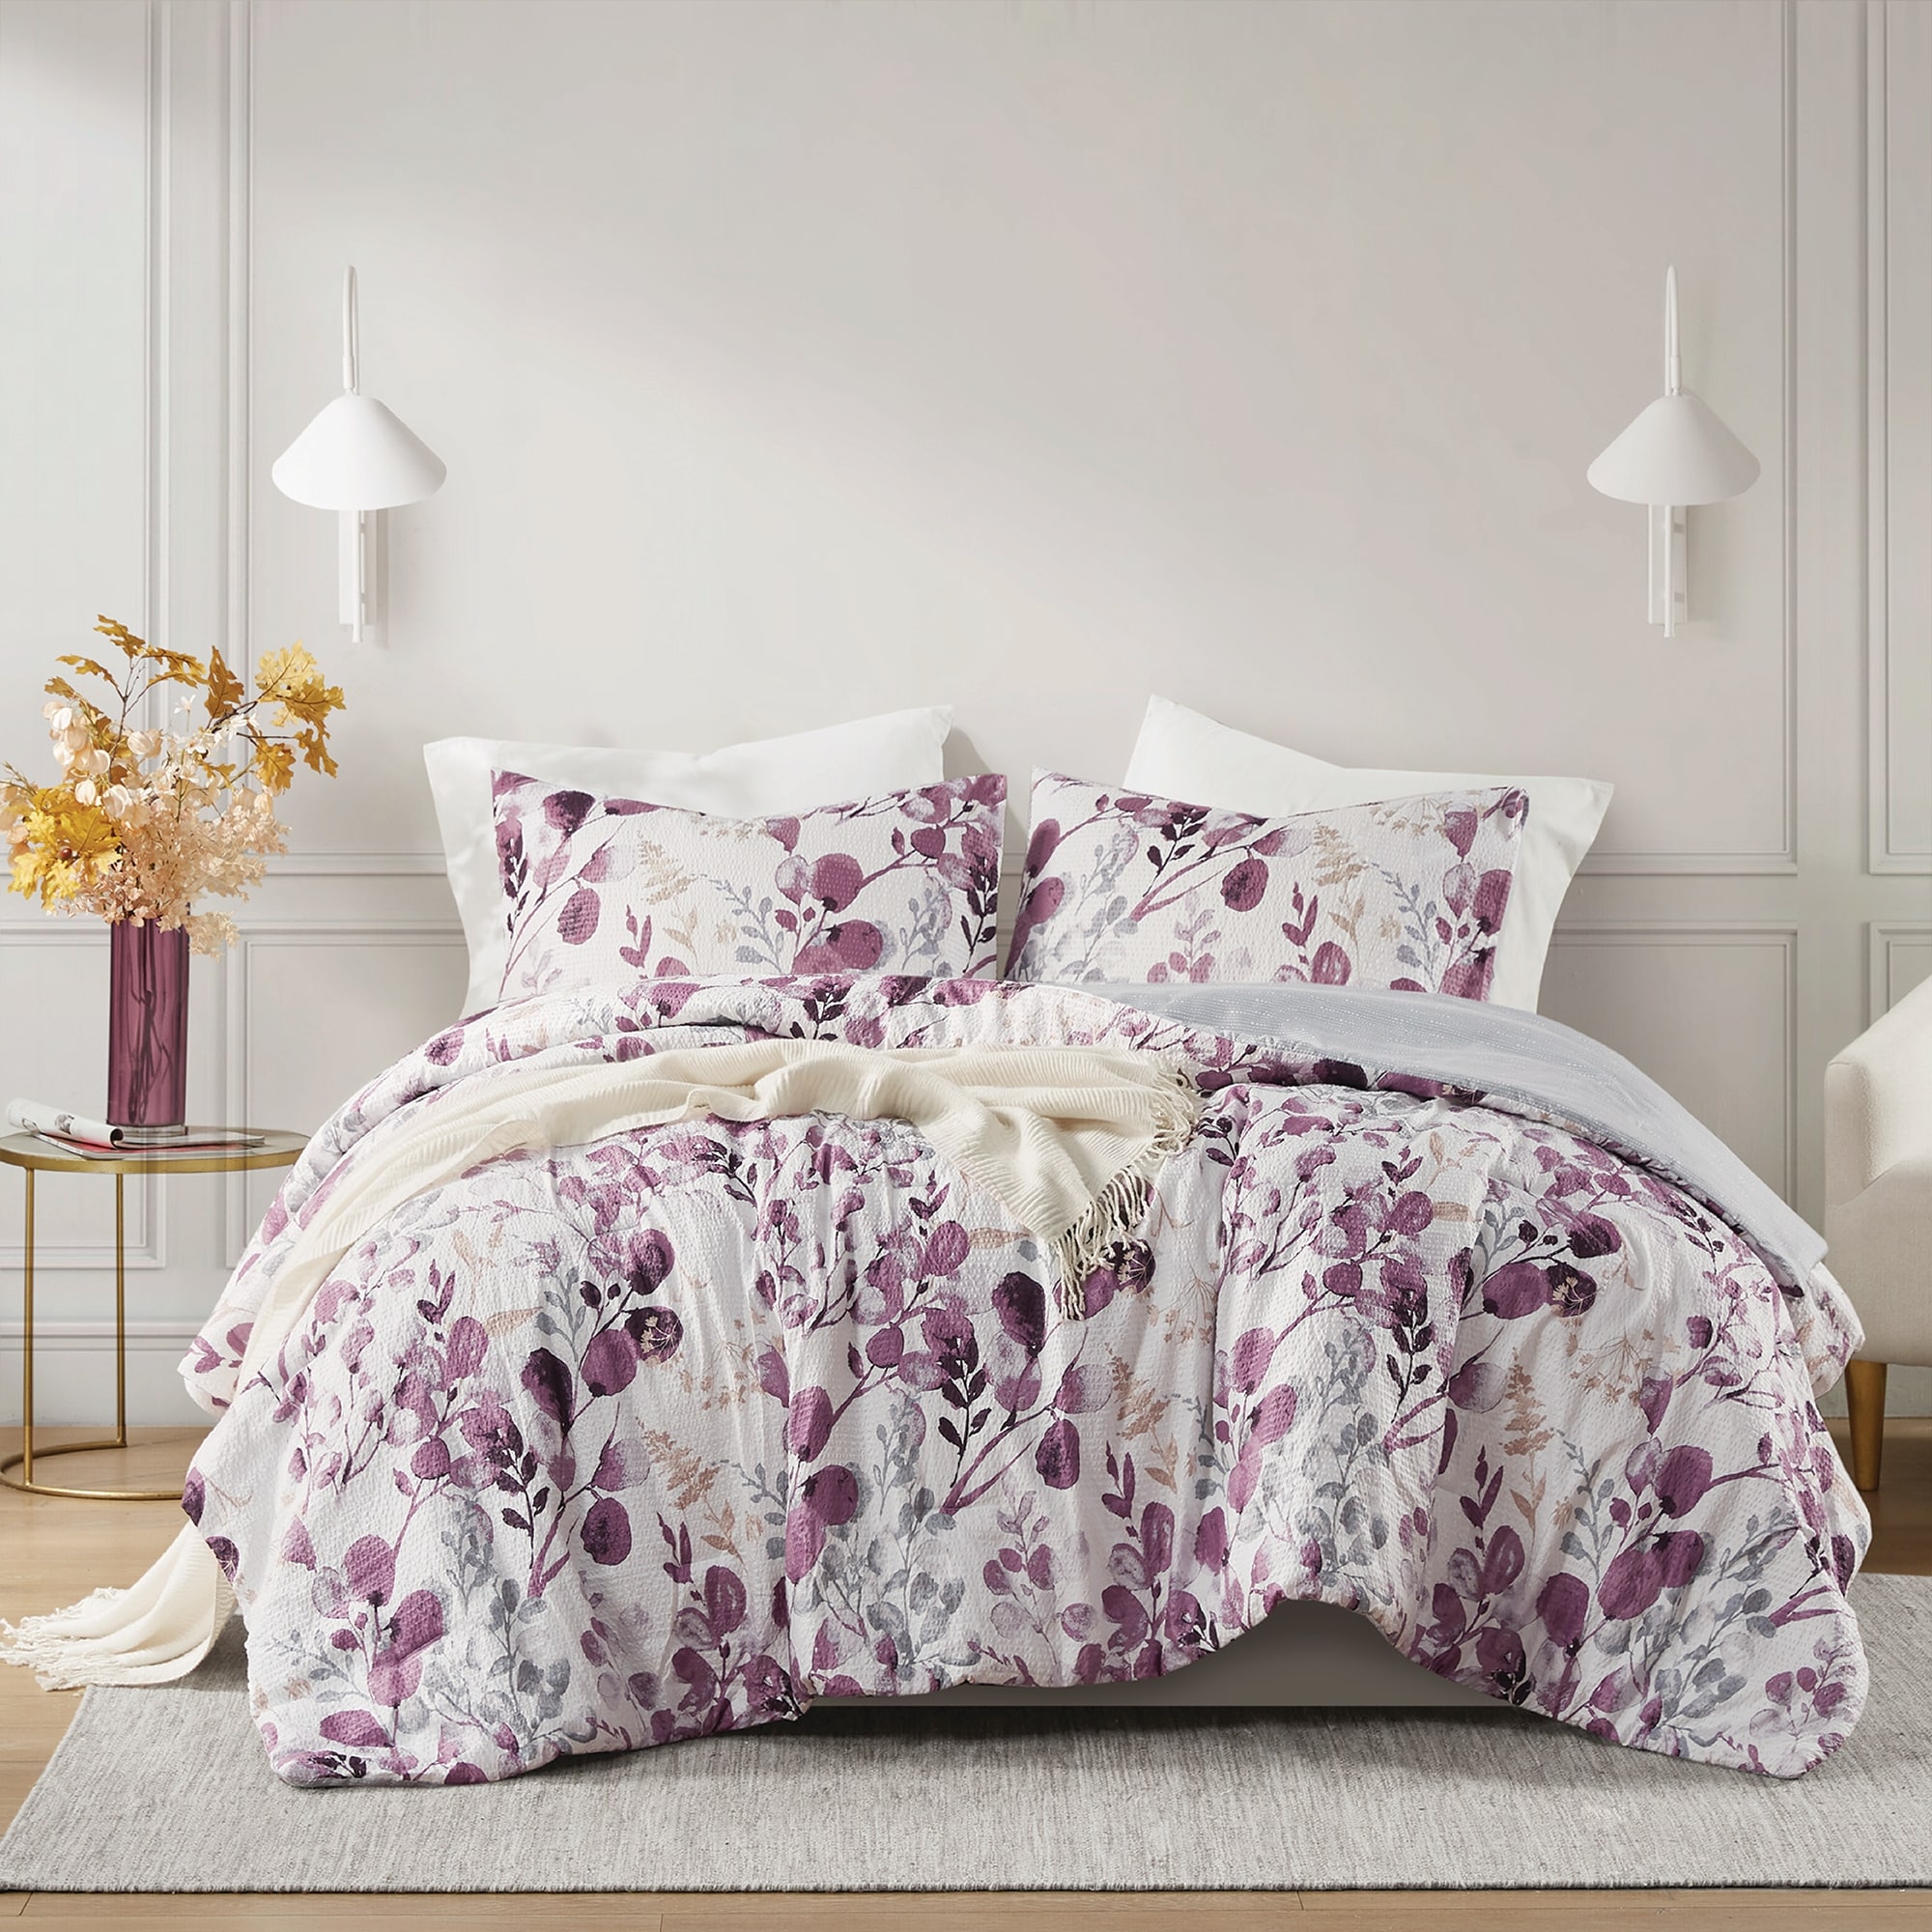 ROSENMYRTEN comforter and pillowcase(s), pink floral pattern, Full